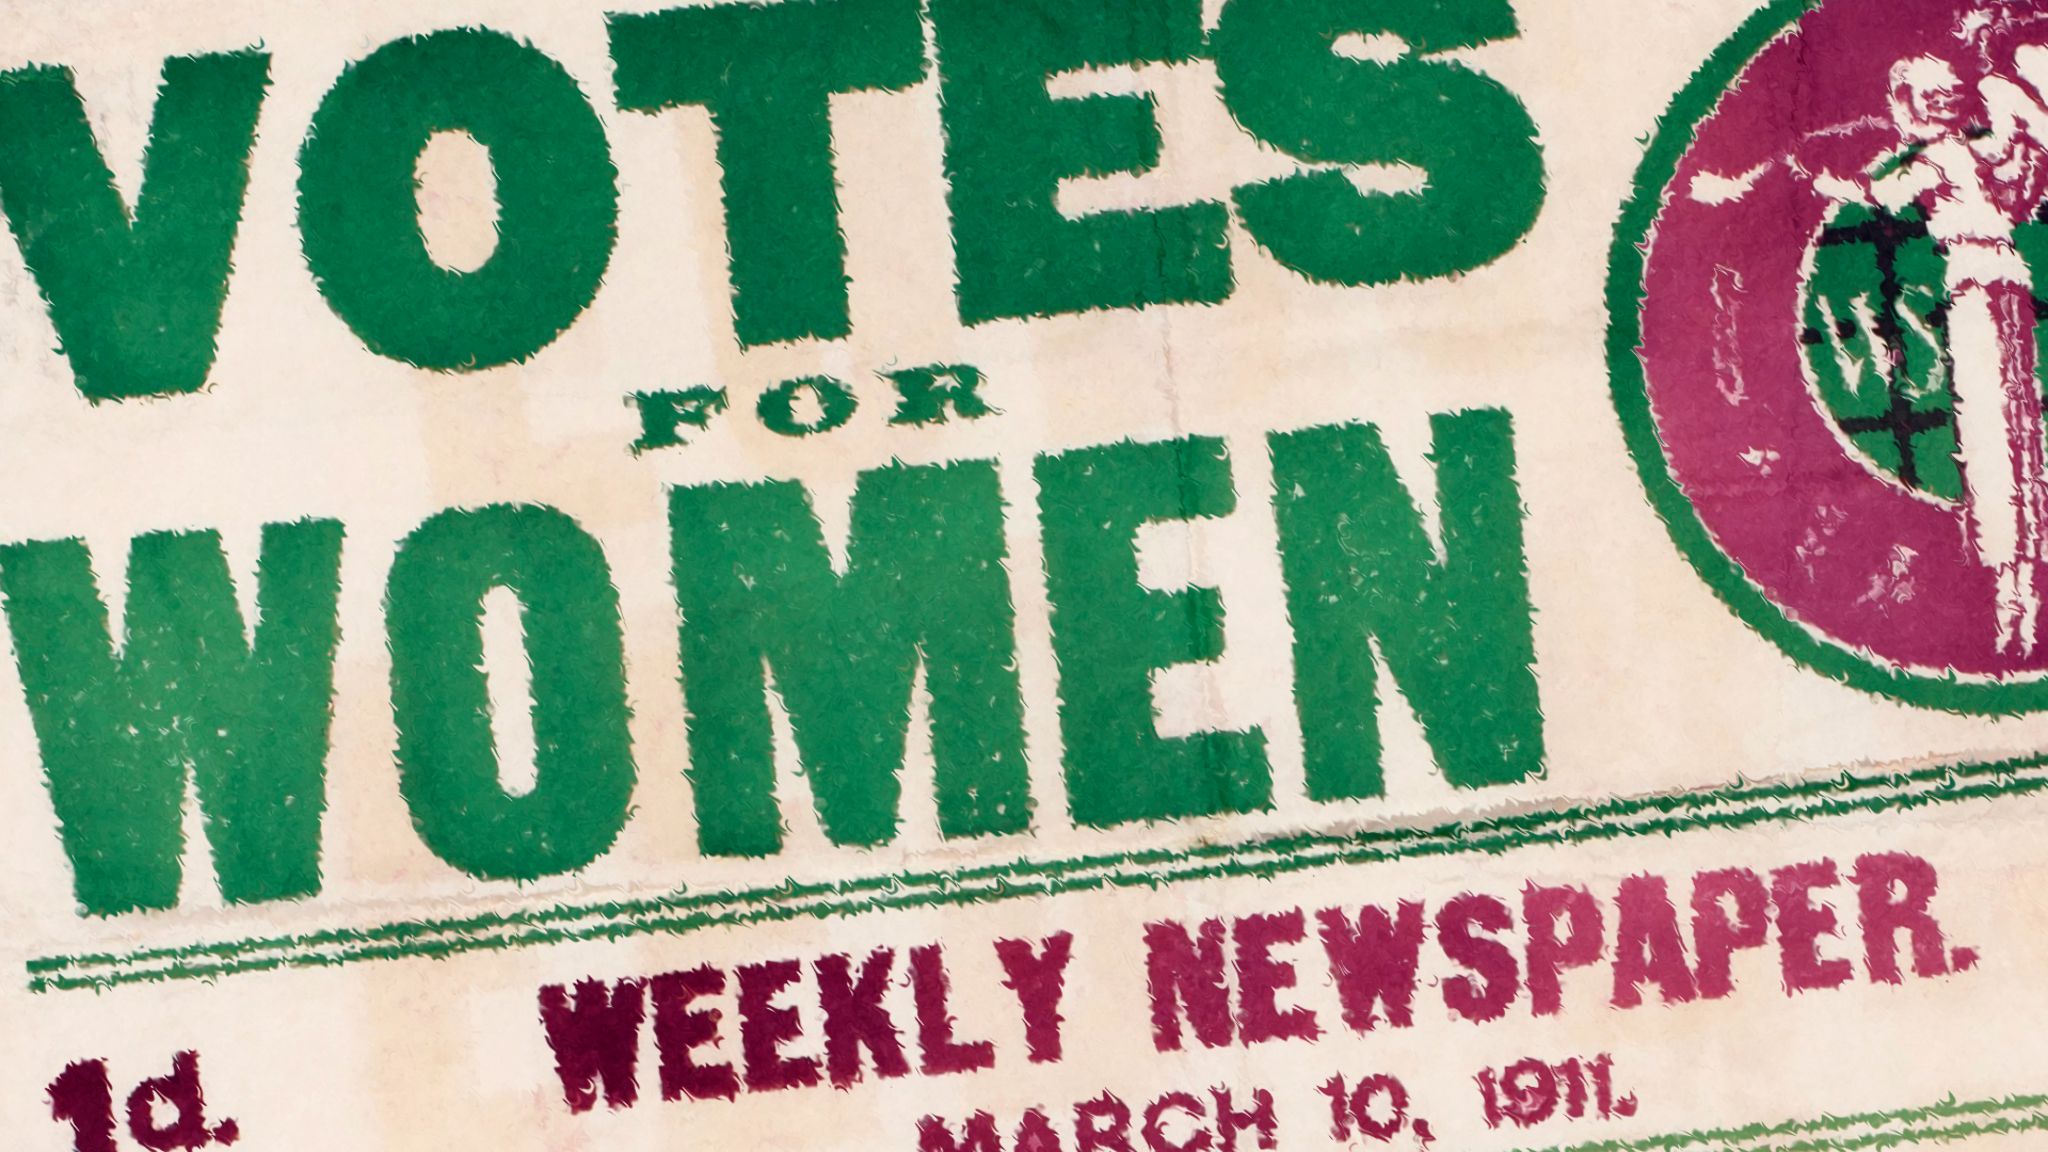 Votes for Women headline